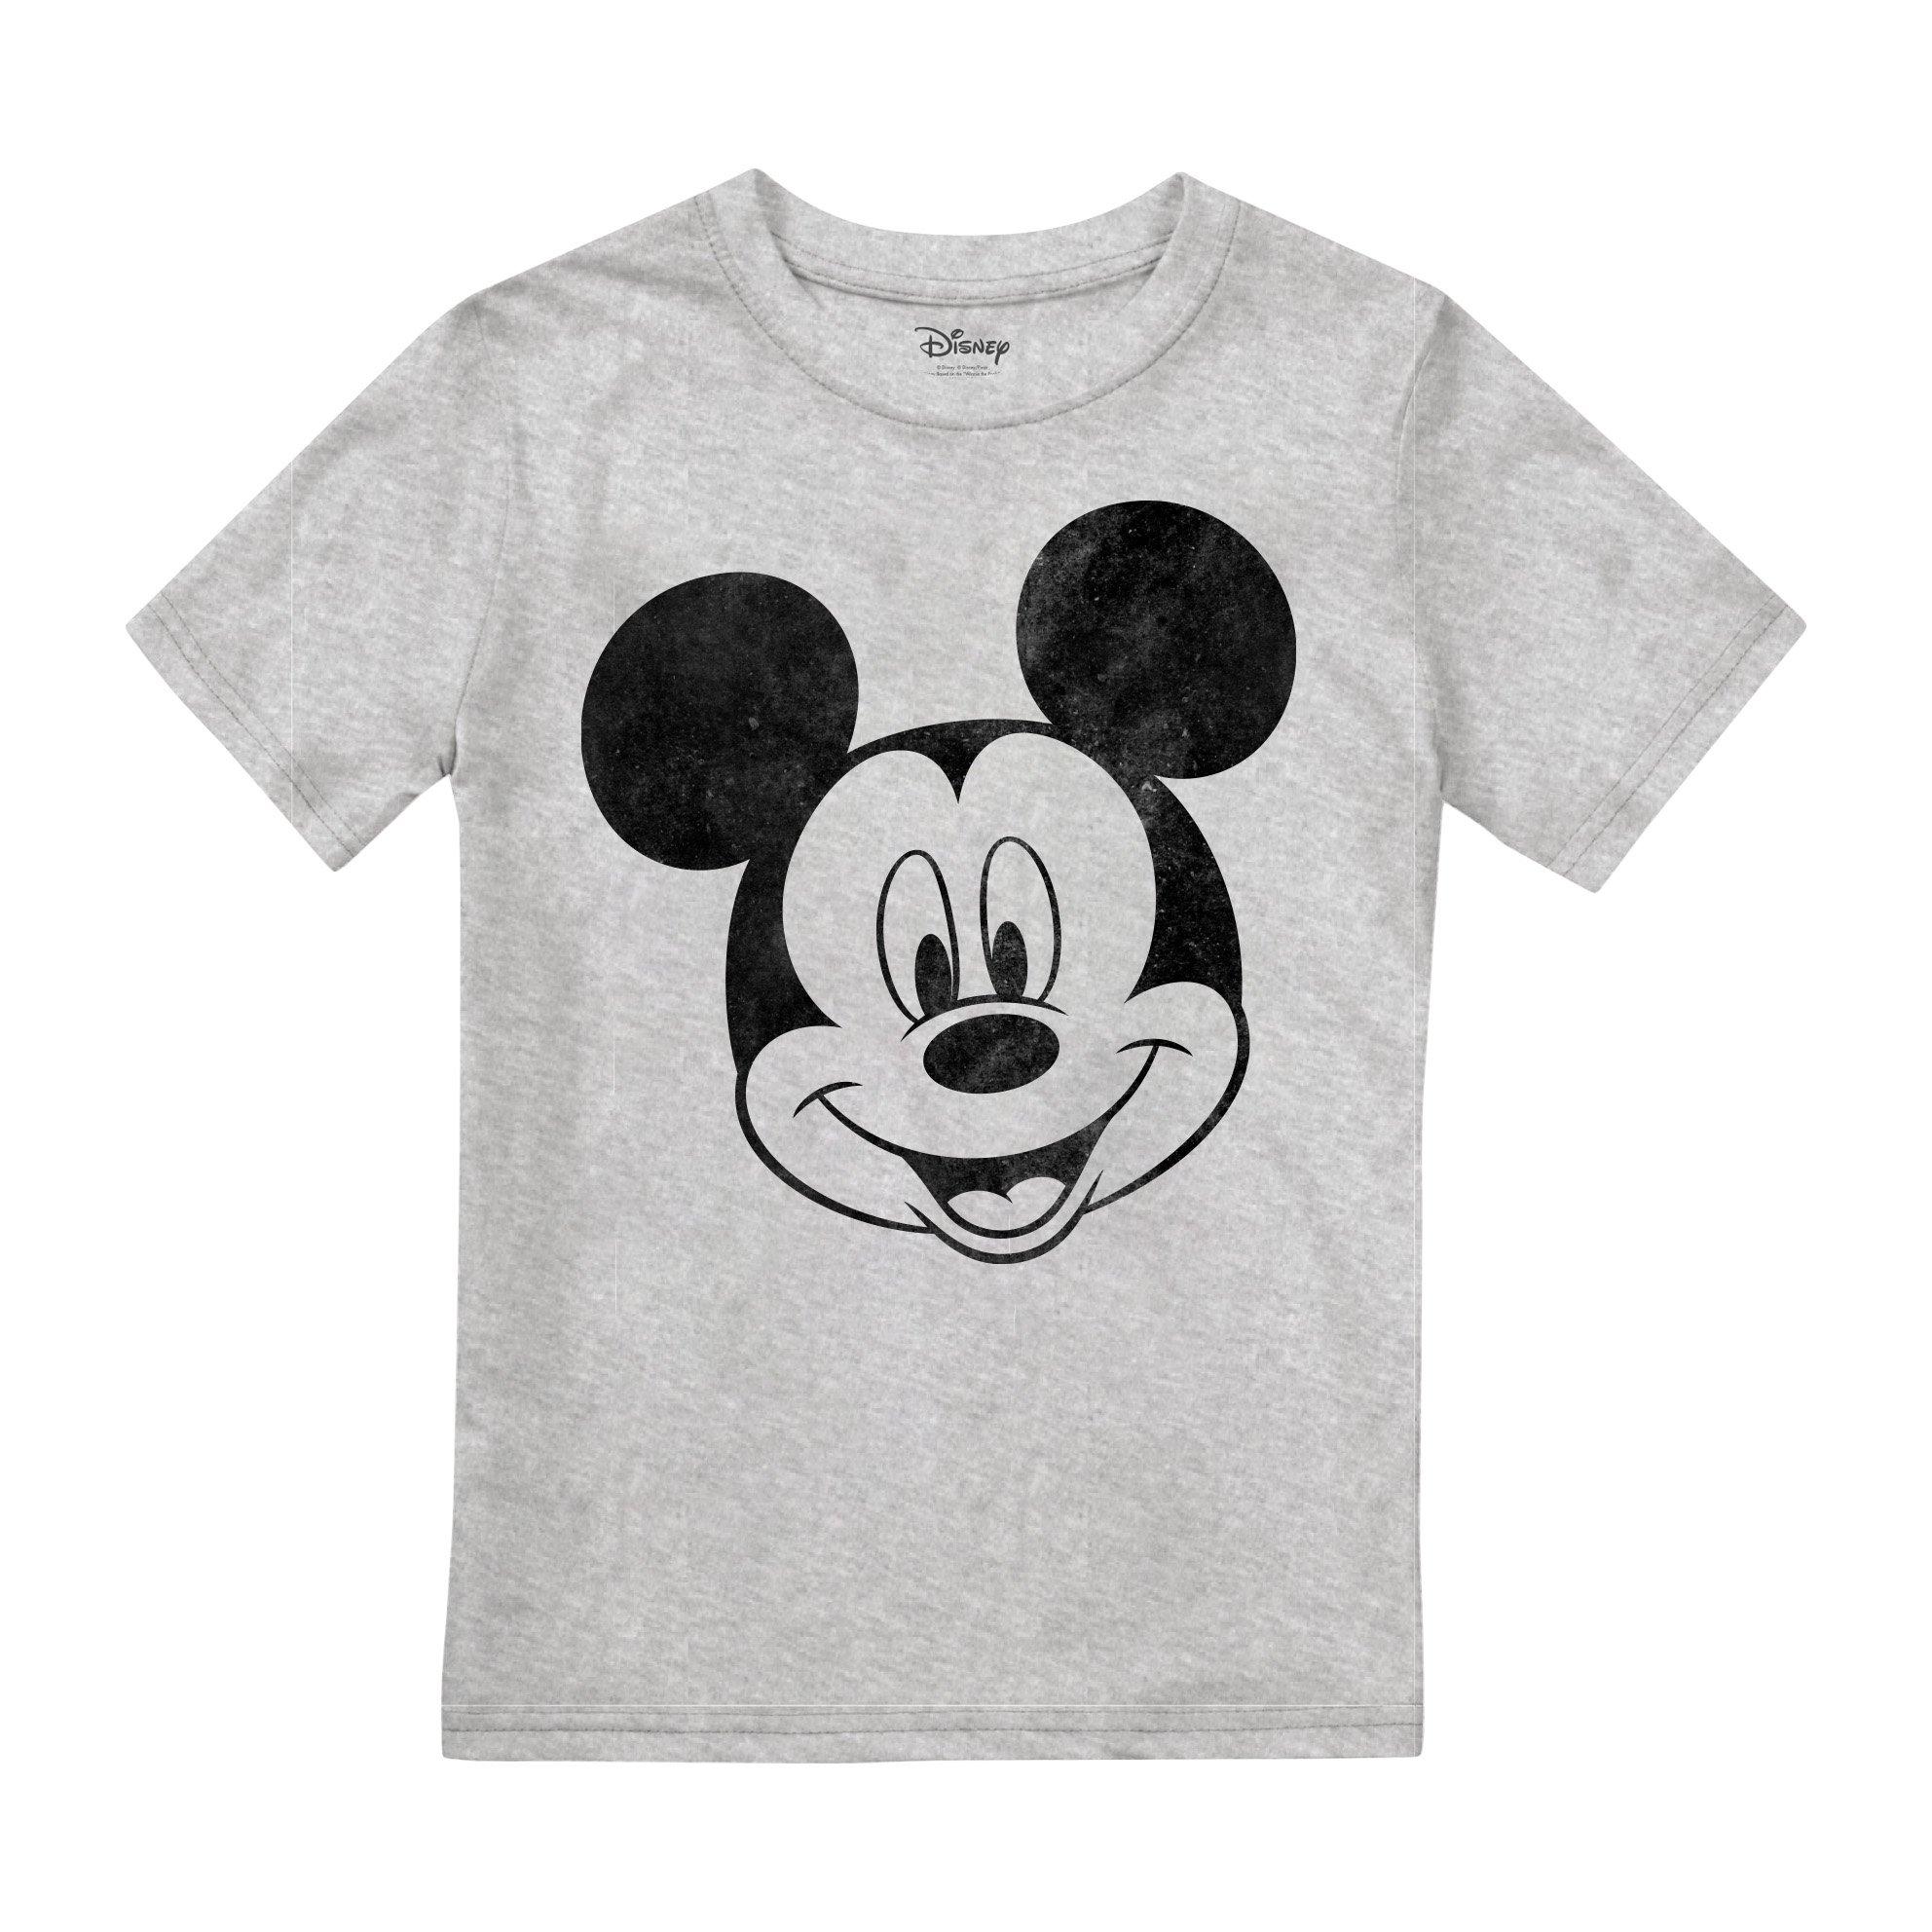 Однотонная футболка с Микки Маусом Disney, серый 35 300 500 1000 шт детский пазл микки маус и минни